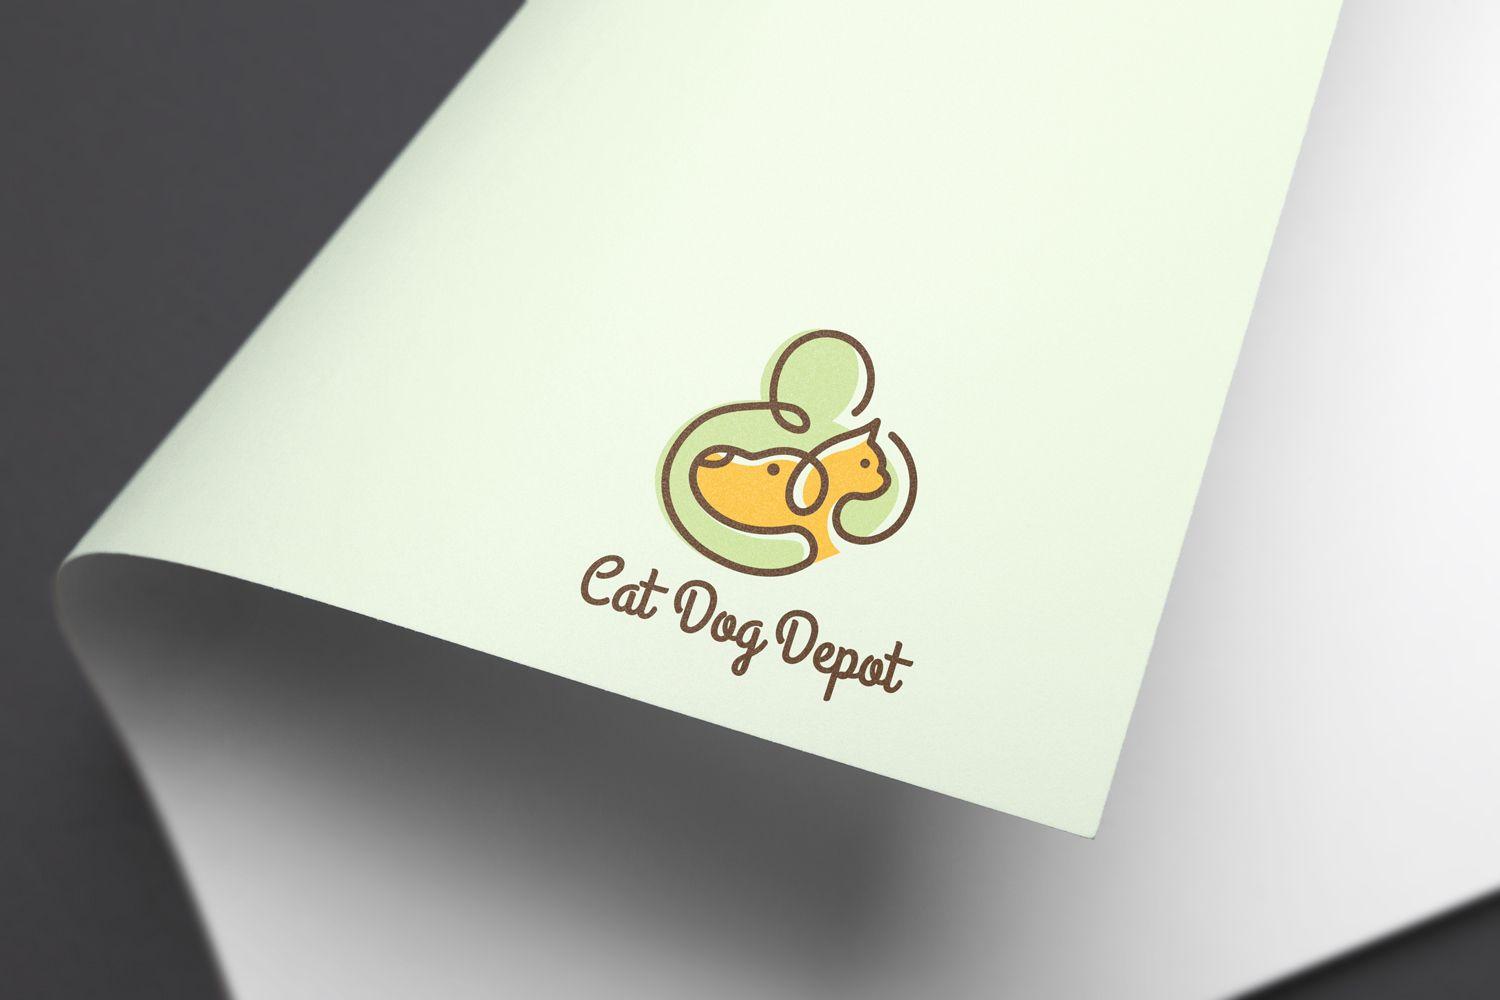 Catdog Logo - Cat Dog Depot. I designed this logo